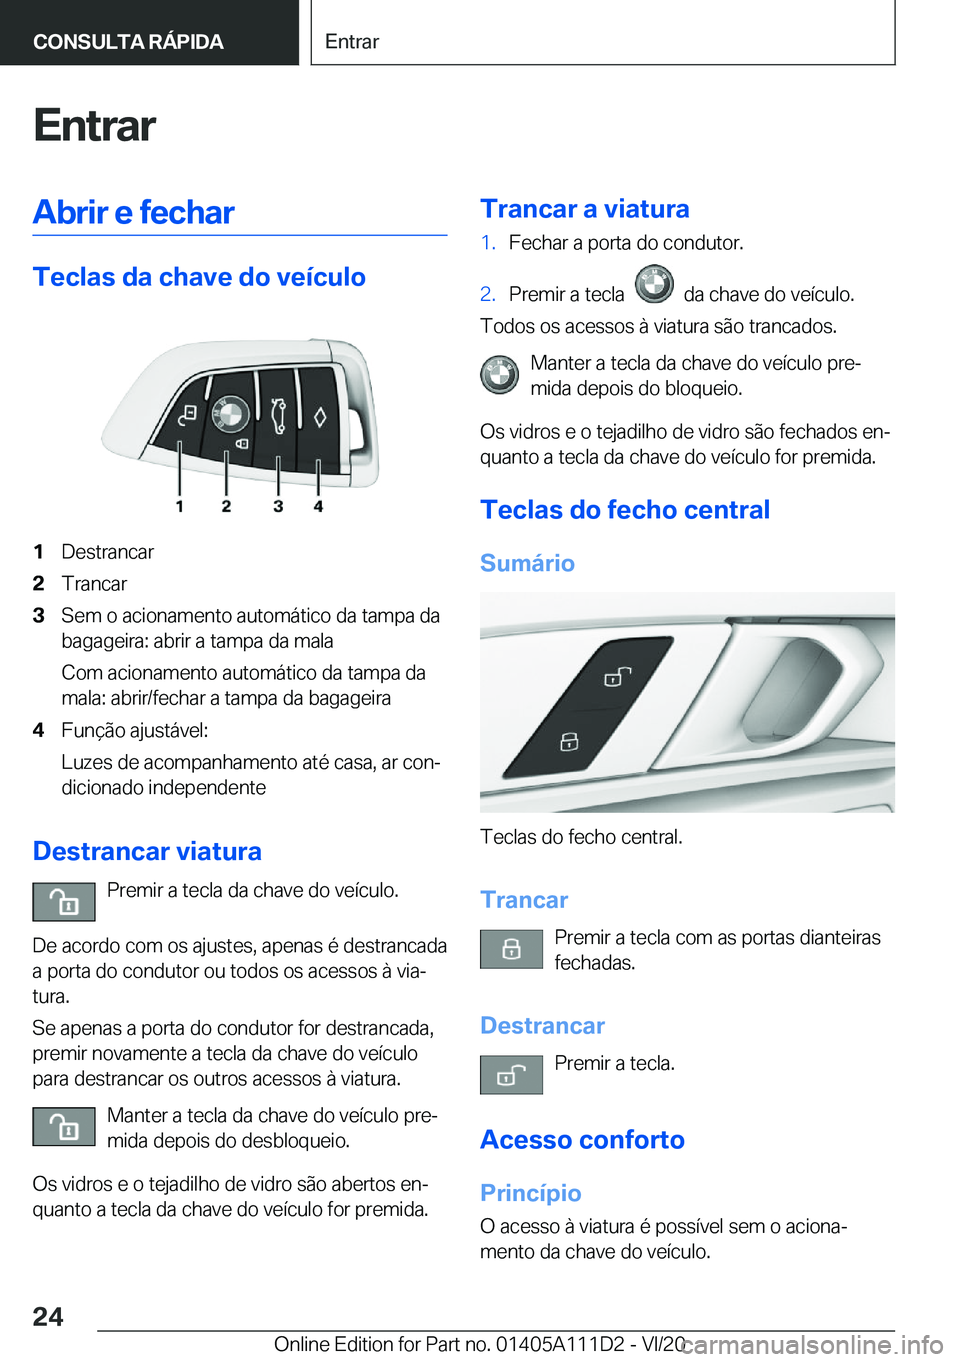 BMW 3 SERIES SEDAN PLUG-IN HYBRID 2021  Manual do condutor (in Portuguese) �E�n�t�r�a�r�A�b�r�i�r��e��f�e�c�h�a�r
�T�e�c�l�a�s��d�a��c�h�a�v�e��d�o��v�e�